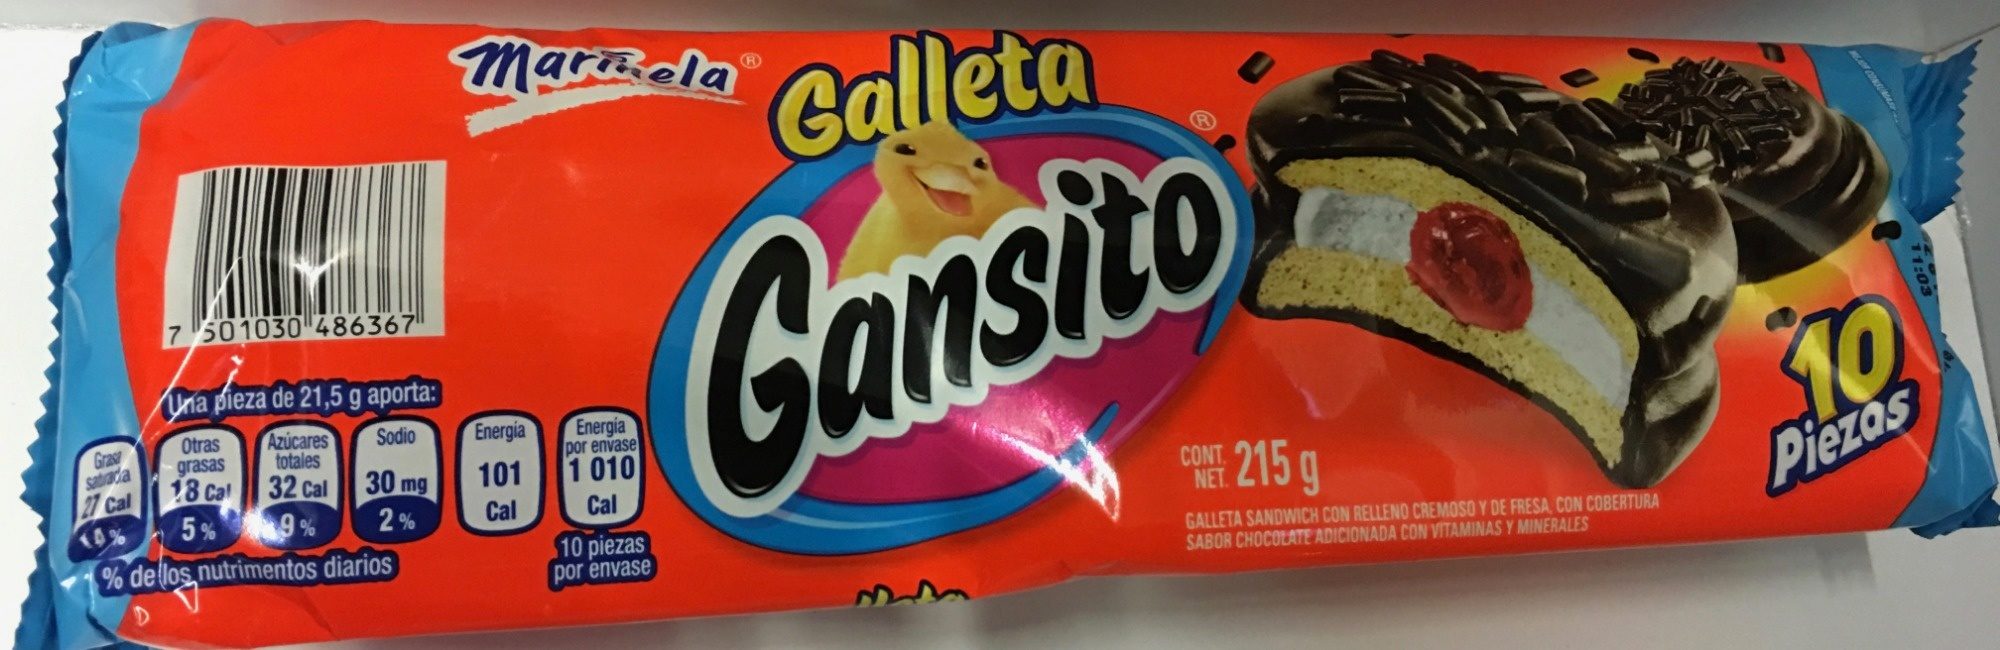 Galleta Gansito - Produkt - es